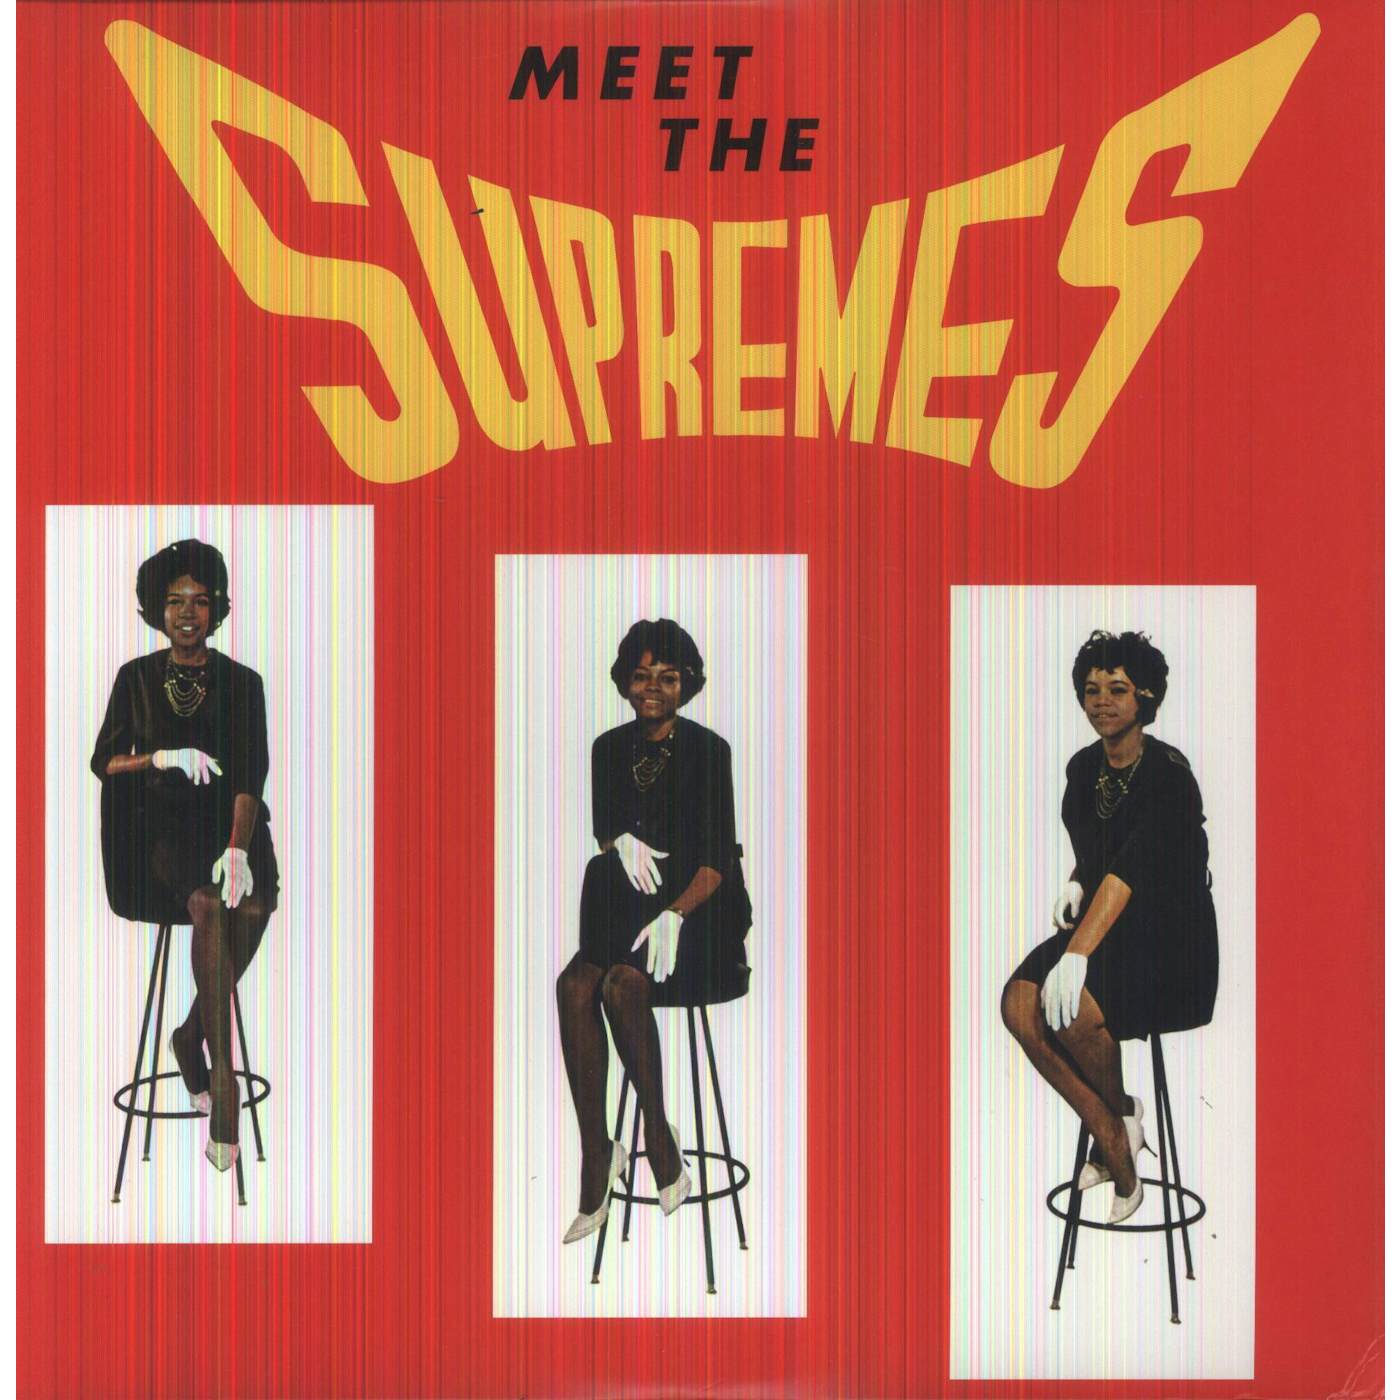 MEET THE SUPREMES (Vinyl)